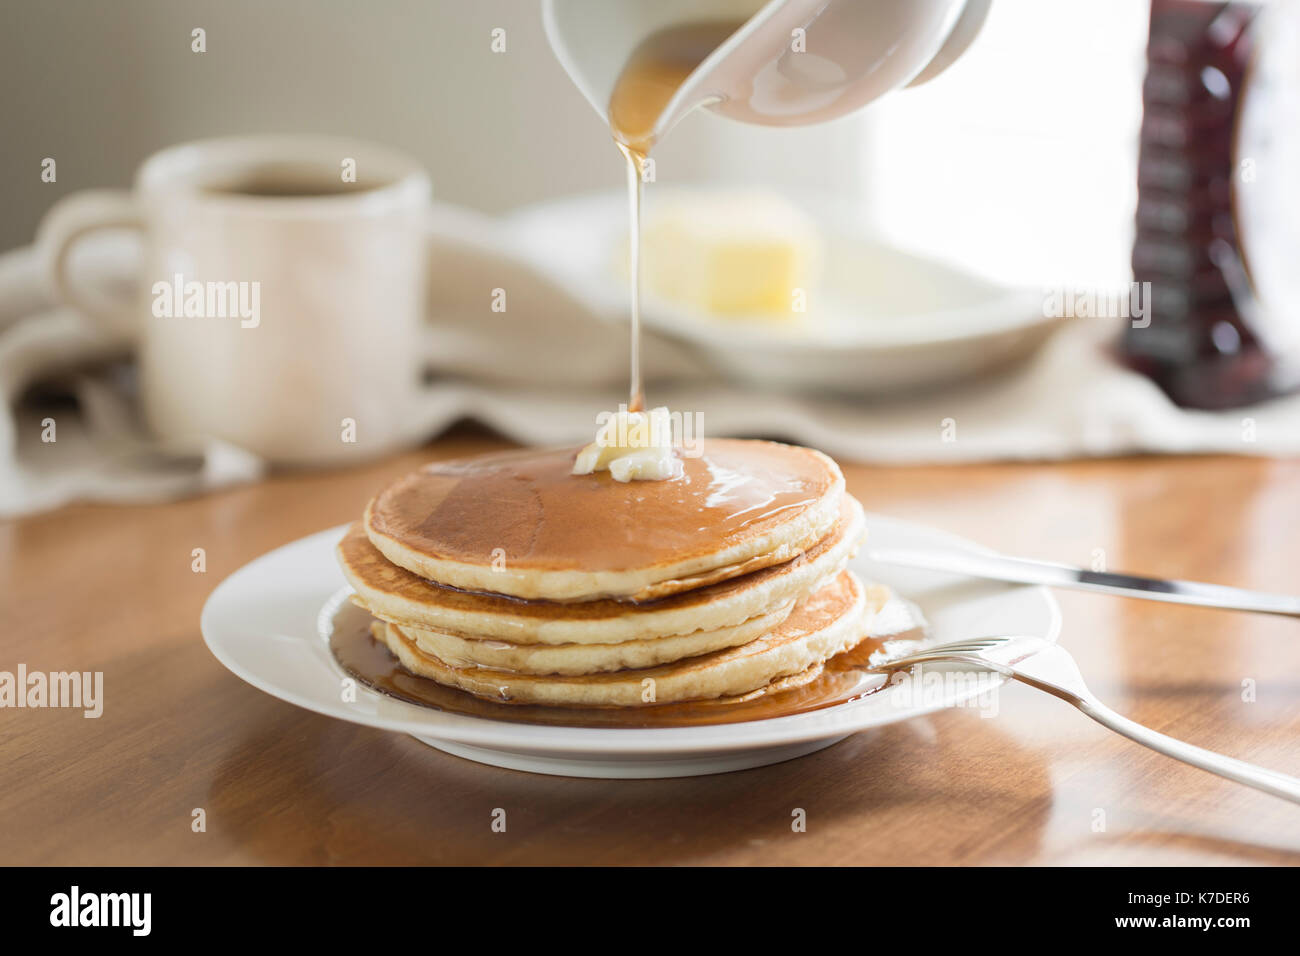 Cropped image of jug pouring honey on pancakes Stock Photo